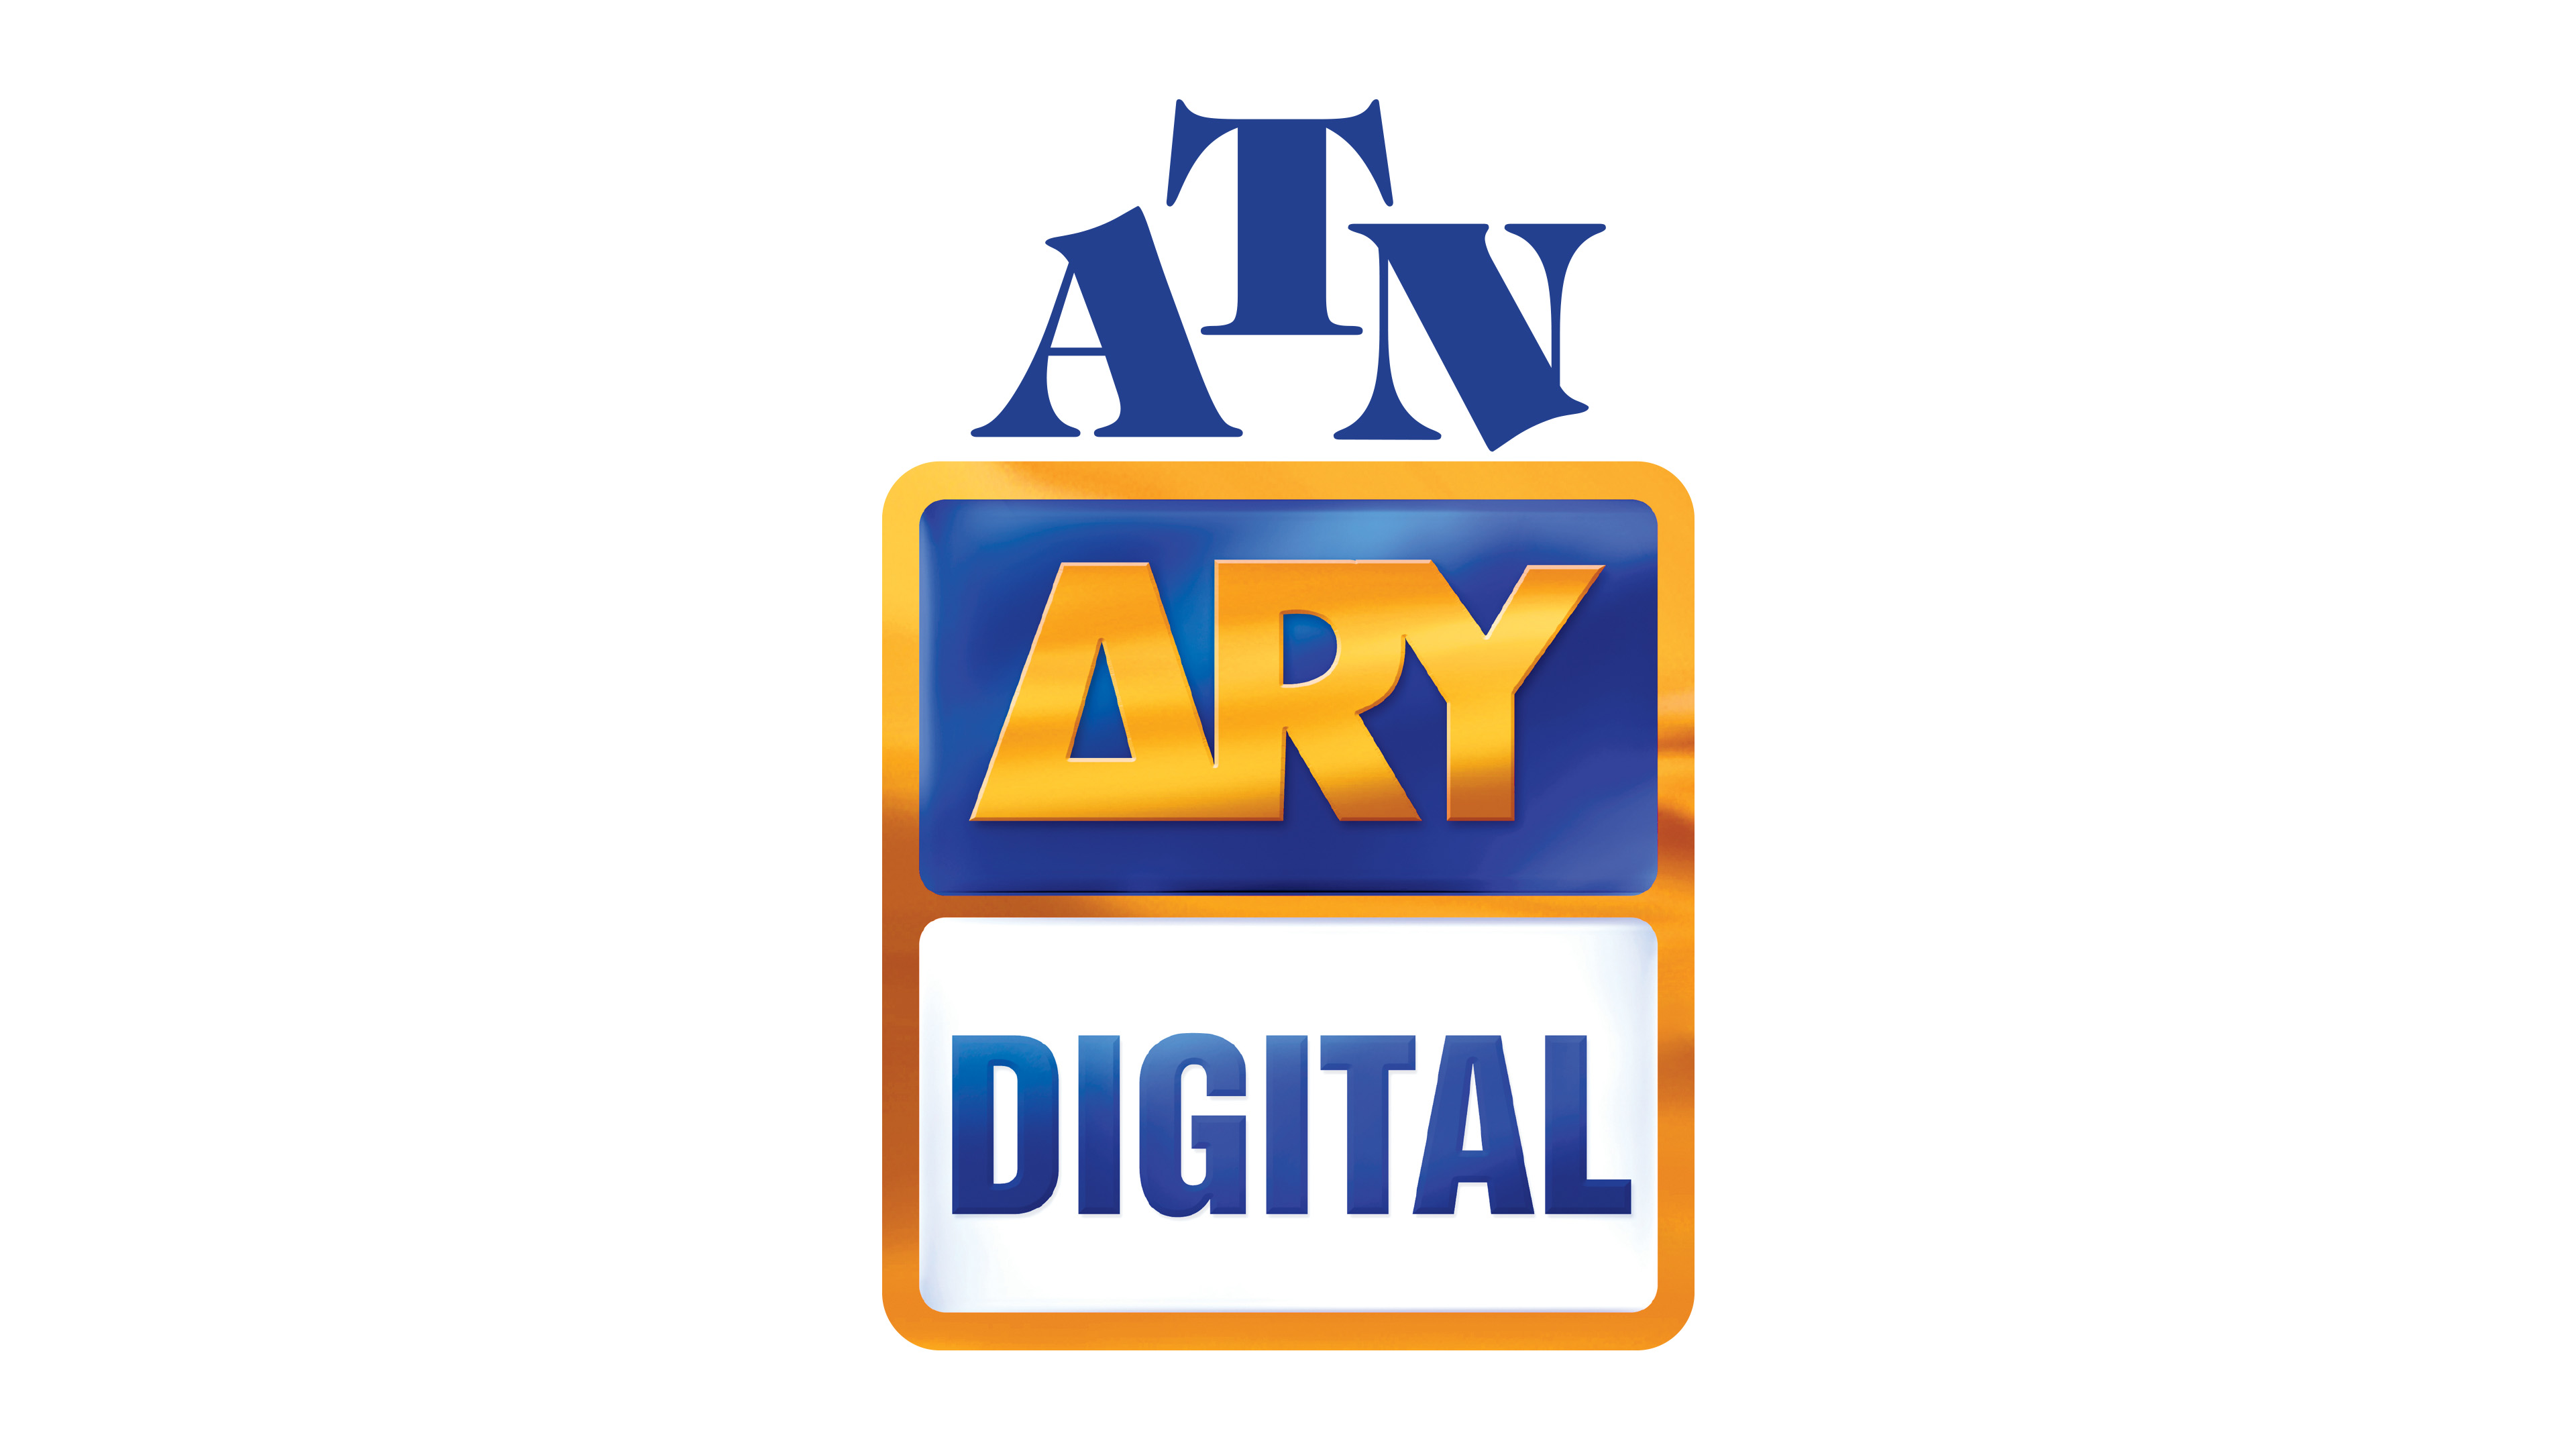 ATN ARY Digital 3840x2160